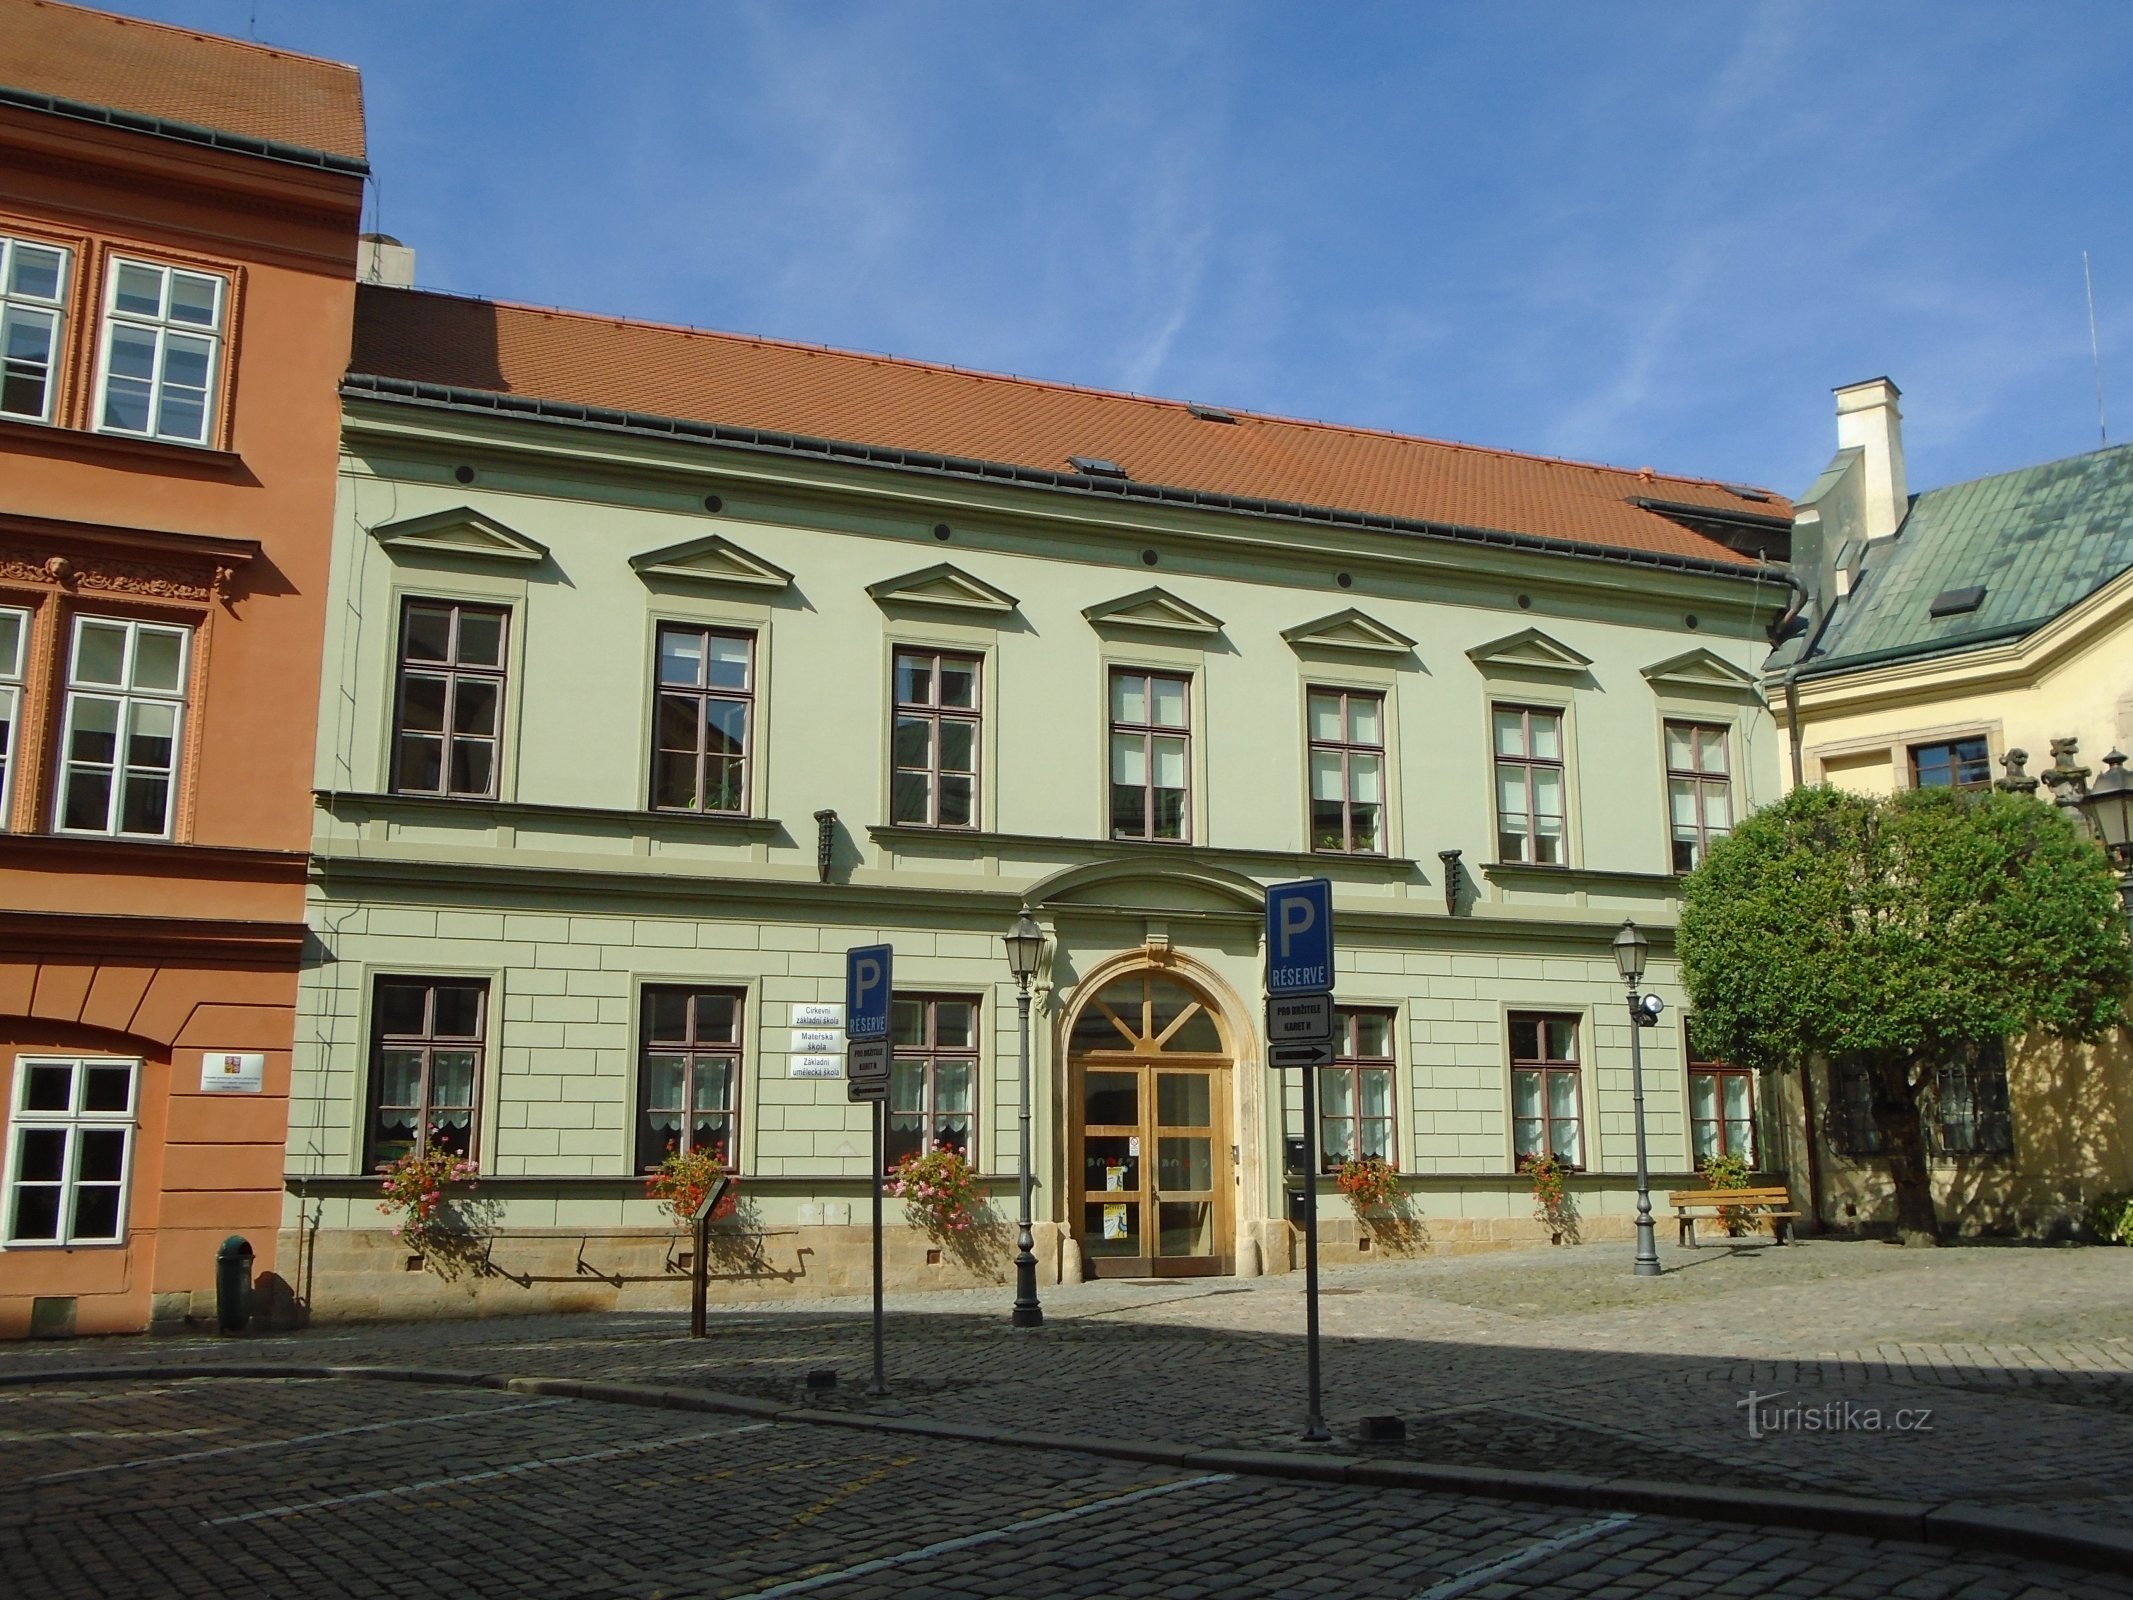 Linnassa nro 90 (Hradec Králové, 16.9.2018. lokakuuta XNUMX)